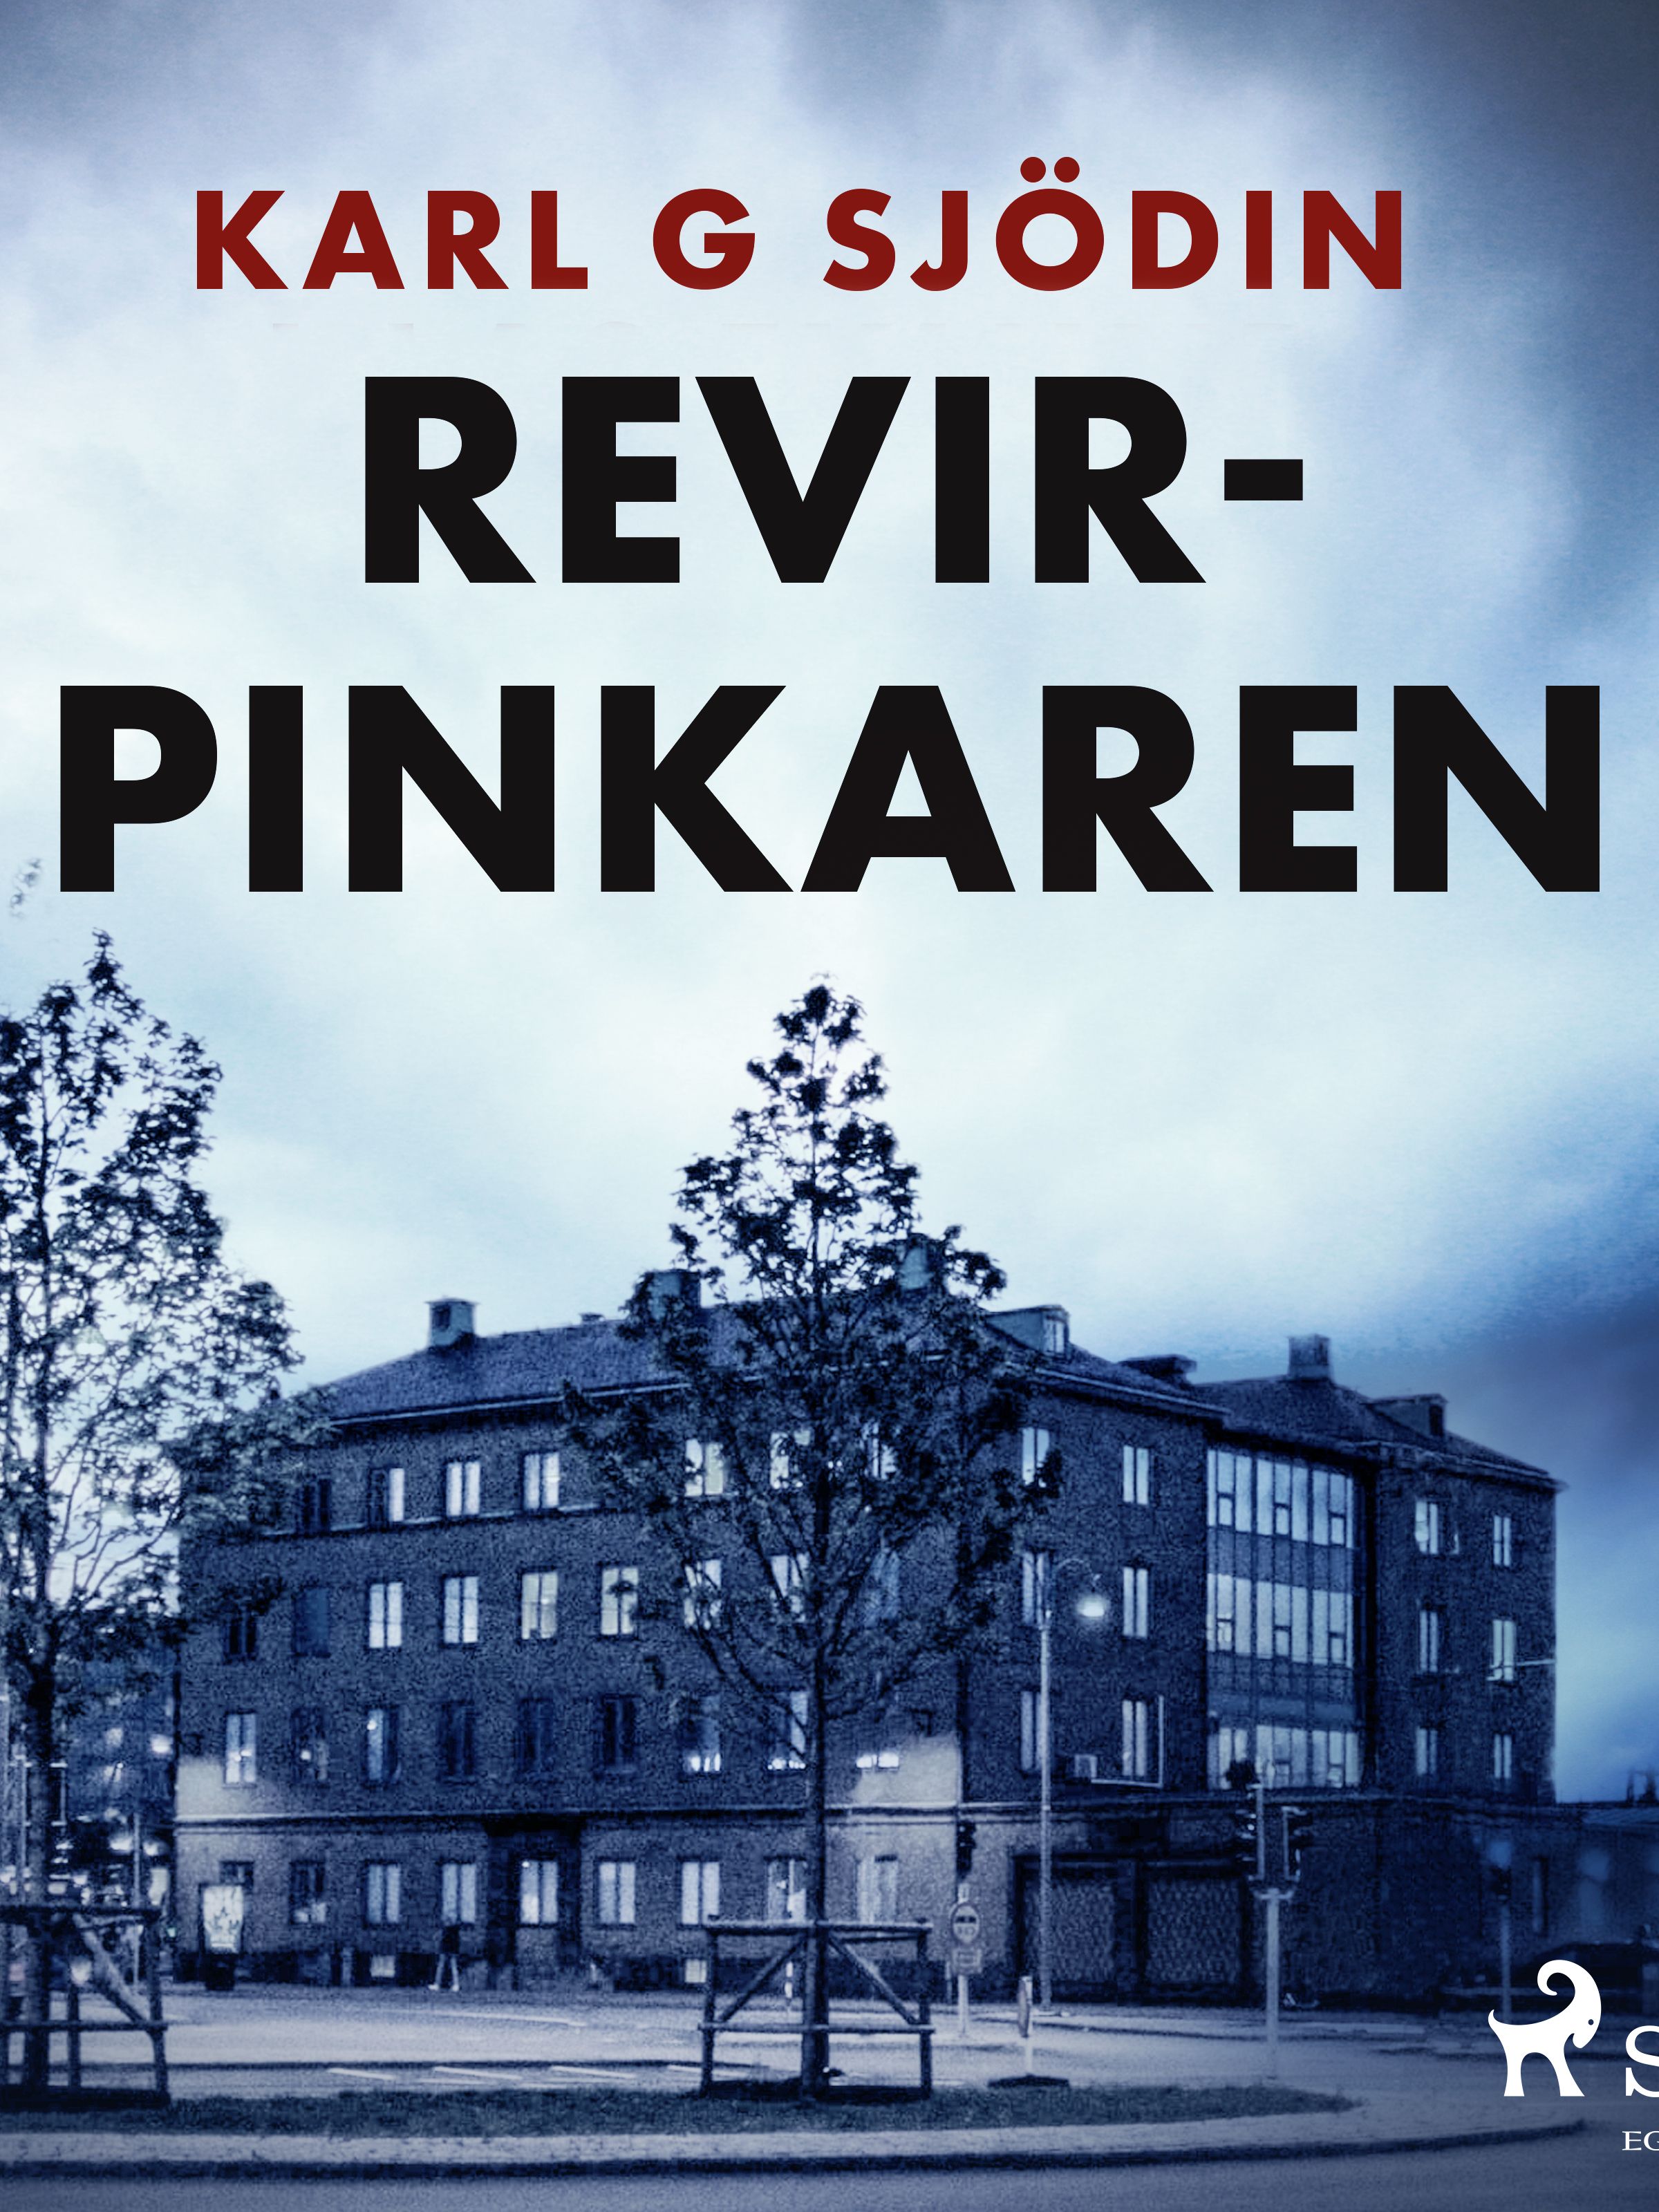 Revirpinkaren, eBook by Karl G Sjödin